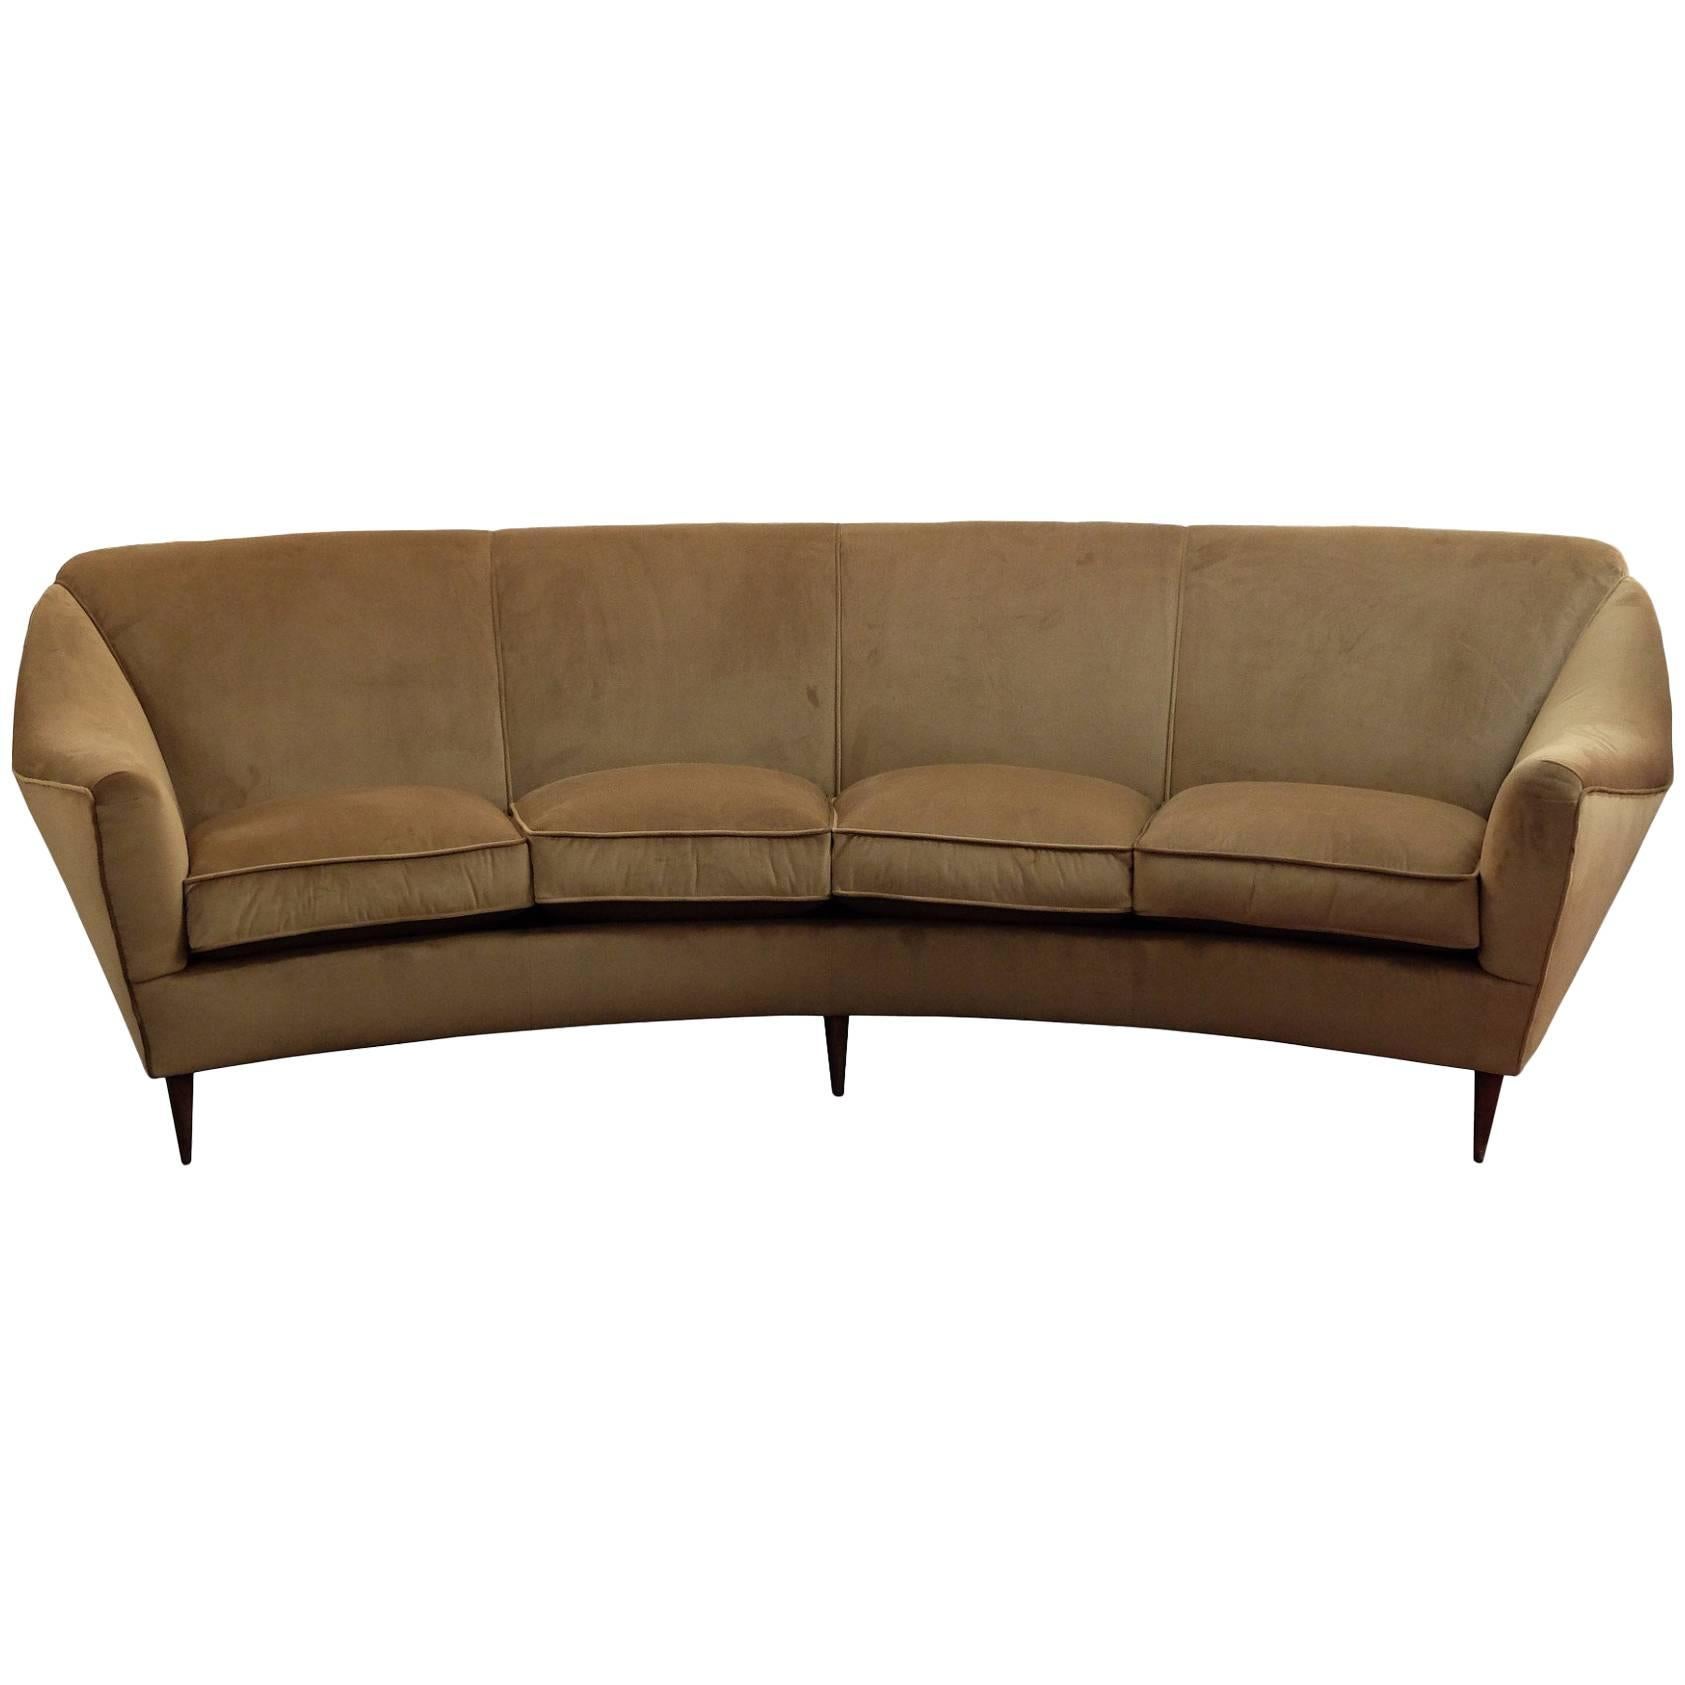 Large Curved Four-Seat Italian Sofa, Newly Upholstered in "Caramel" Velvet